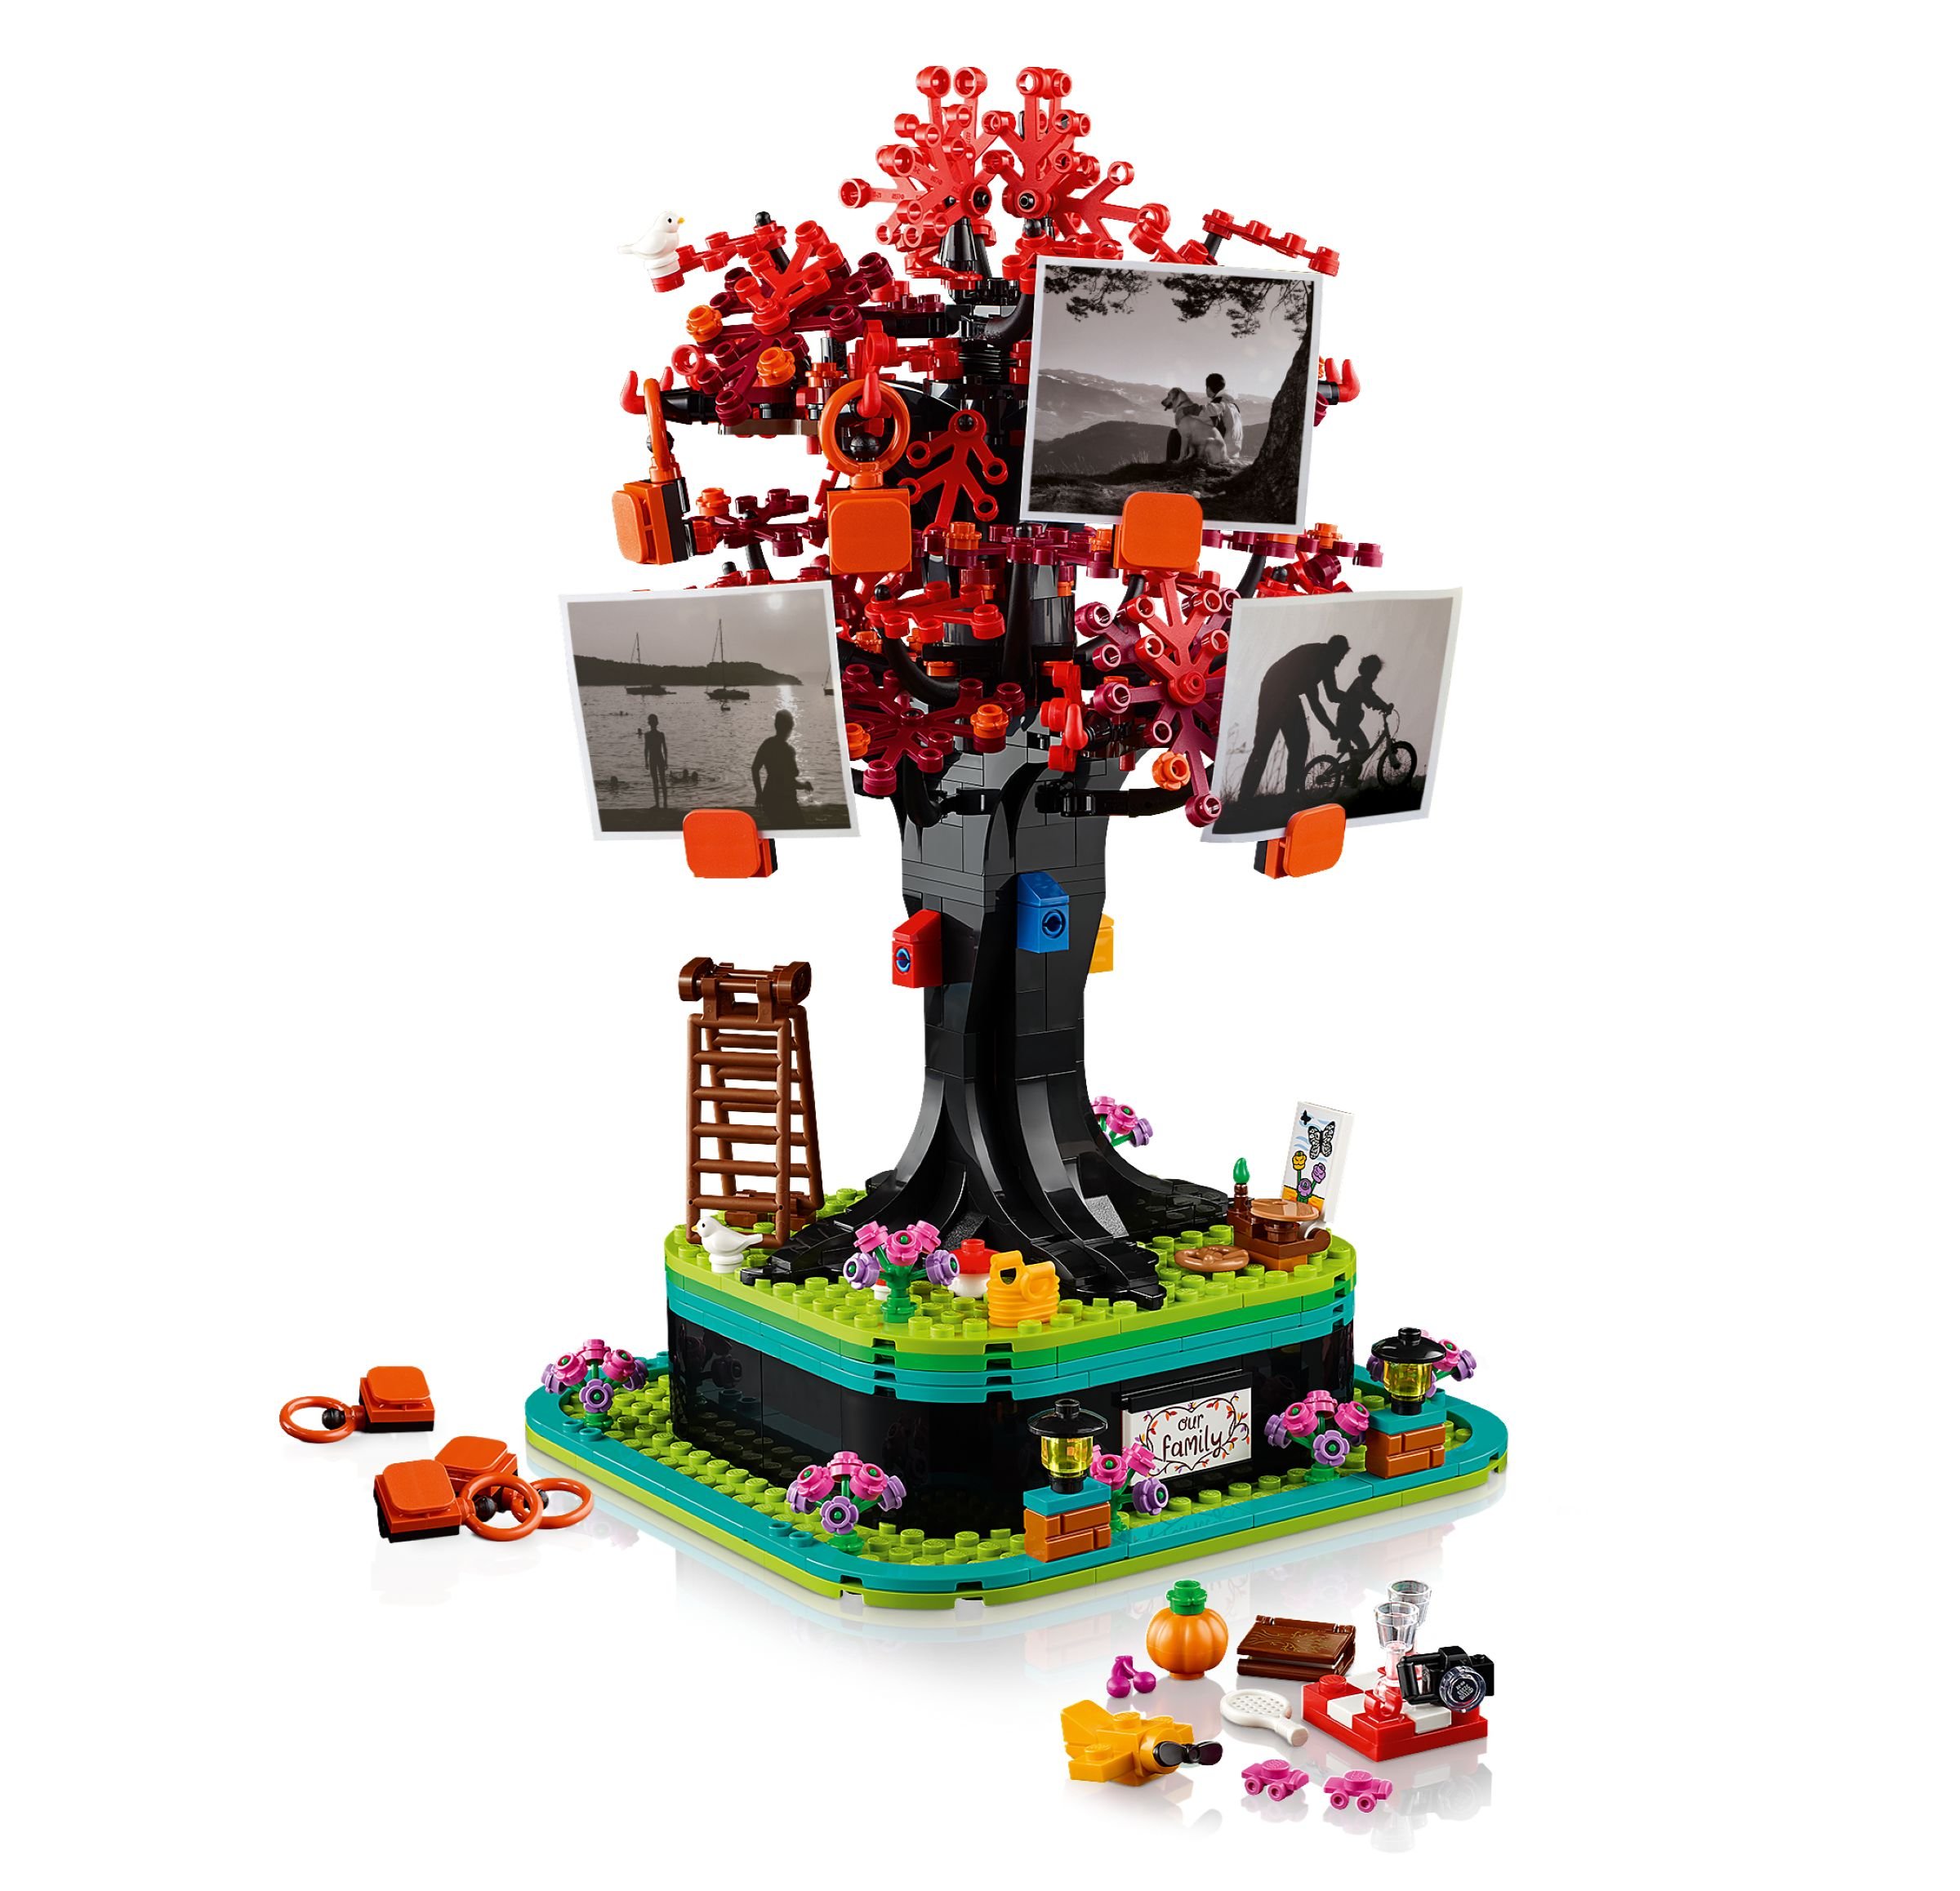 LEGO Ideas 21346 Familienbaum LEGO_21346_alt2.jpg